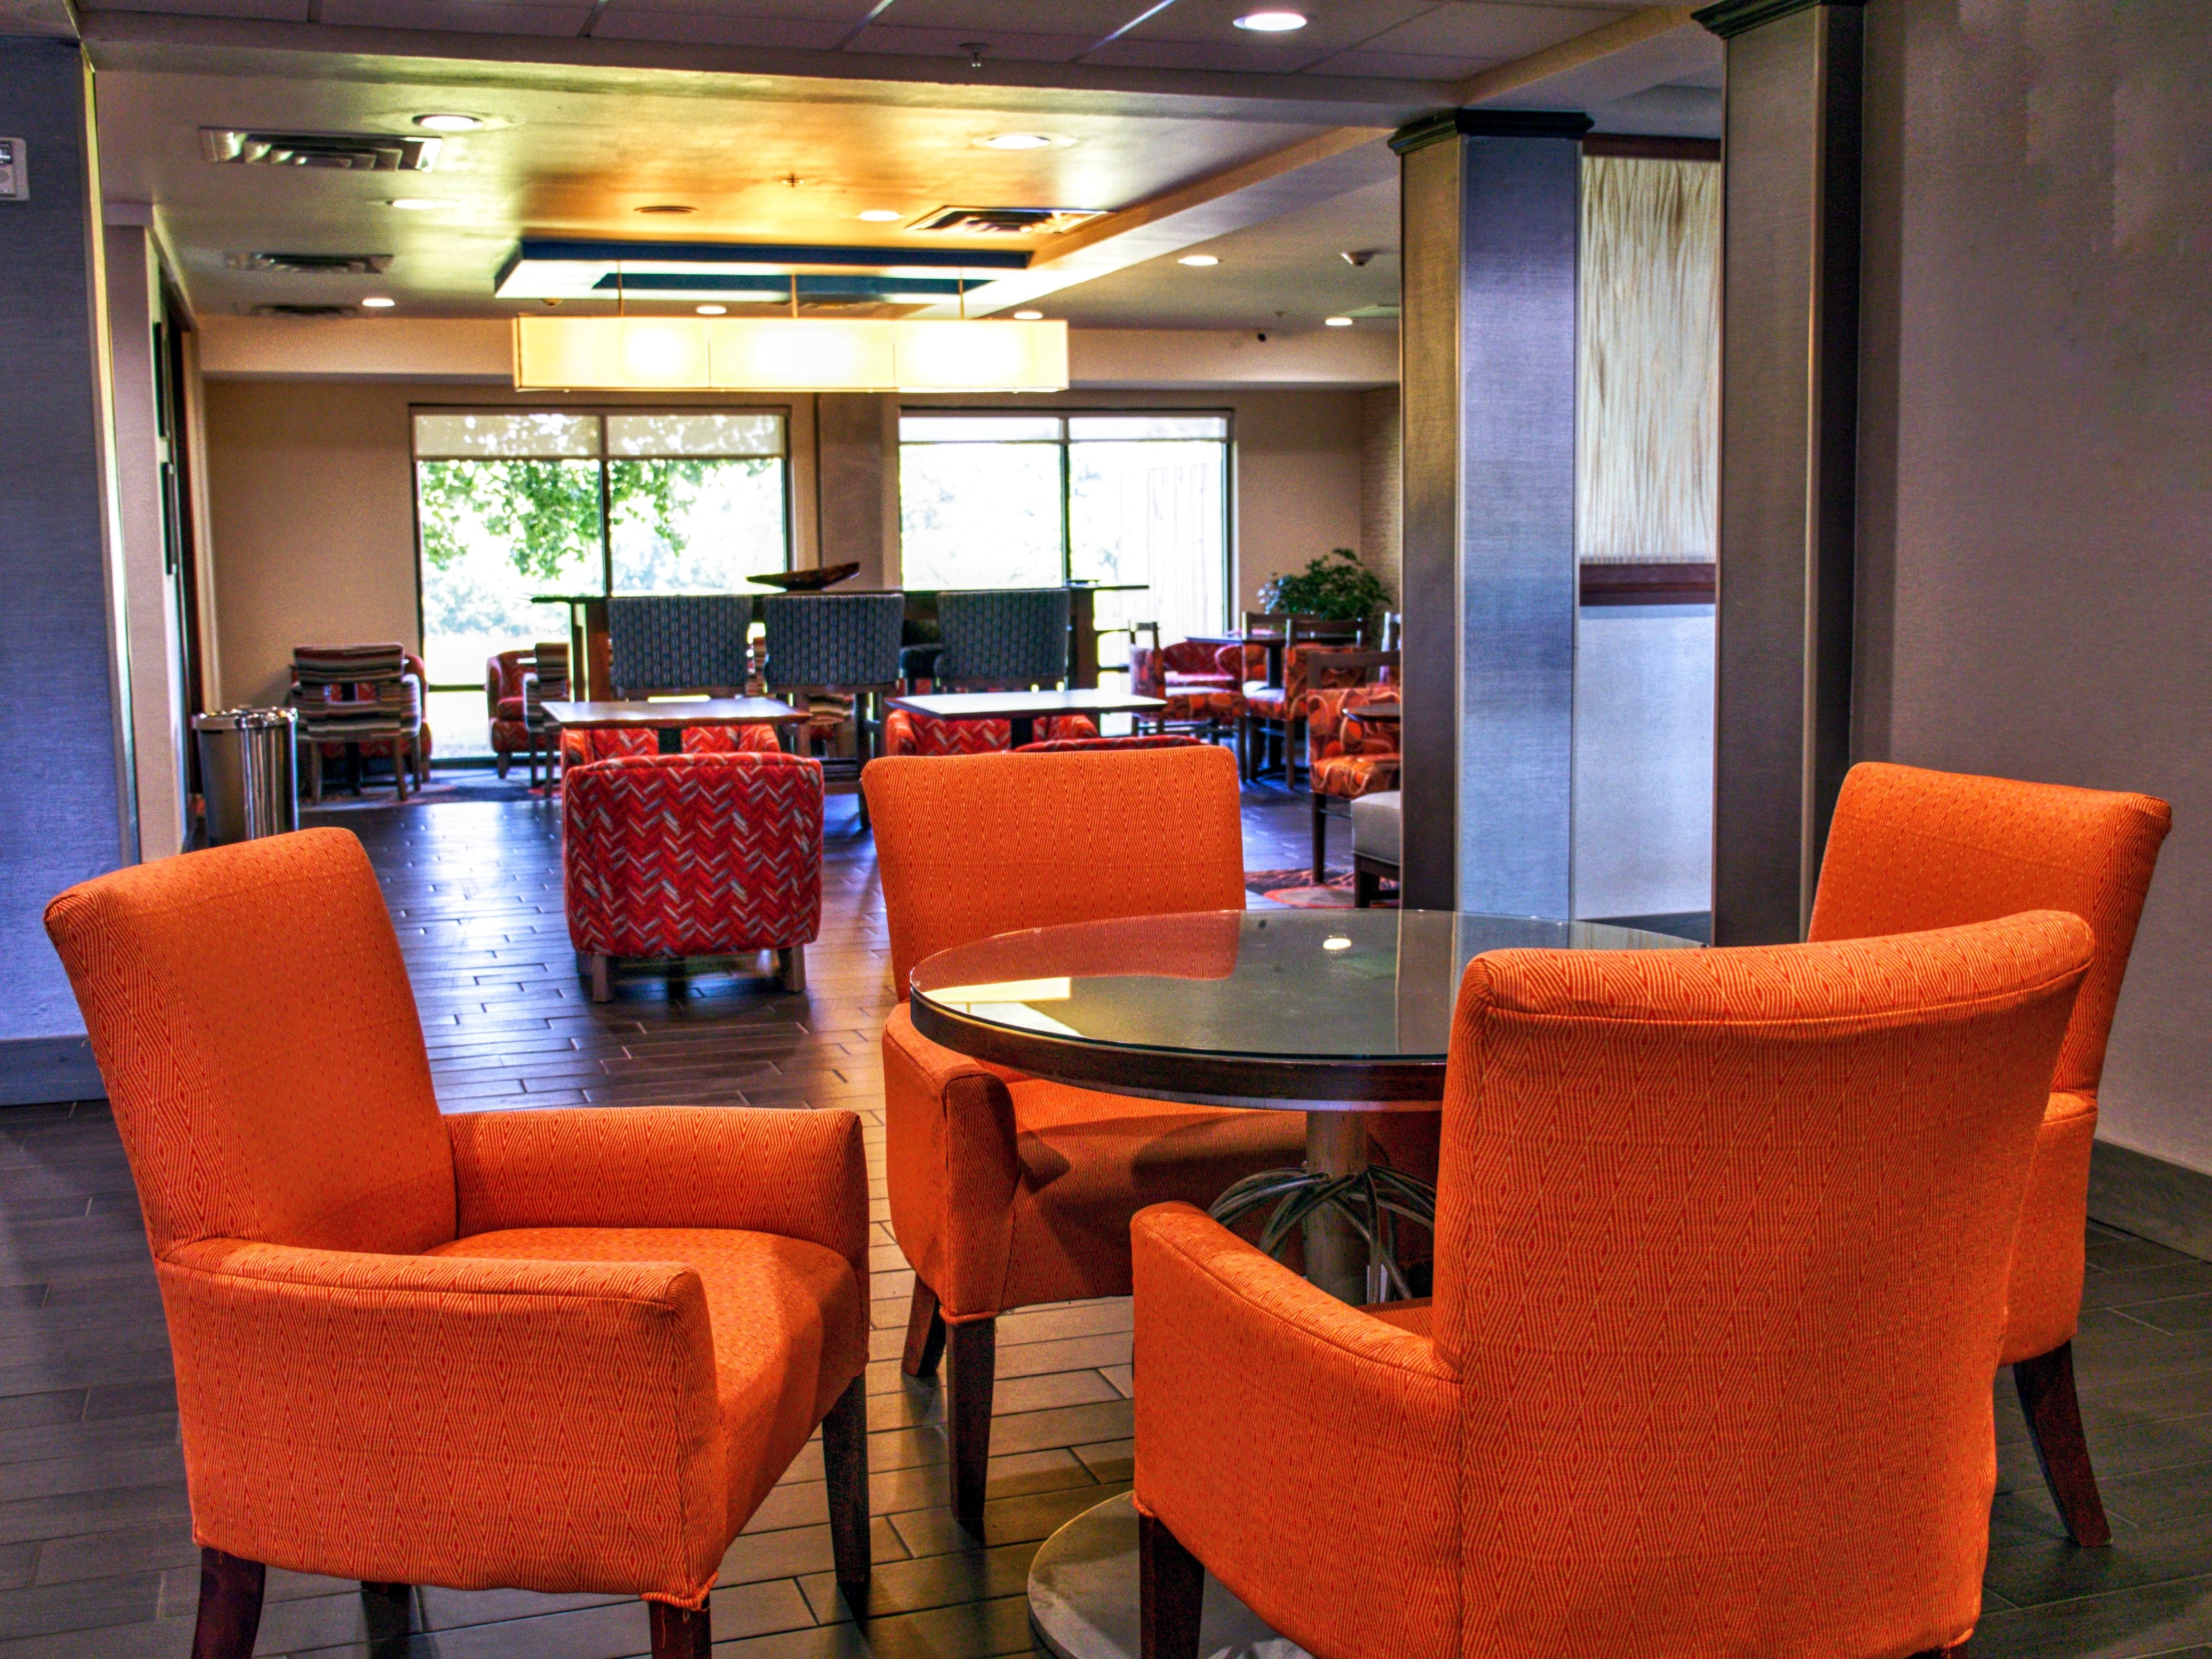 Lobby Dining Area